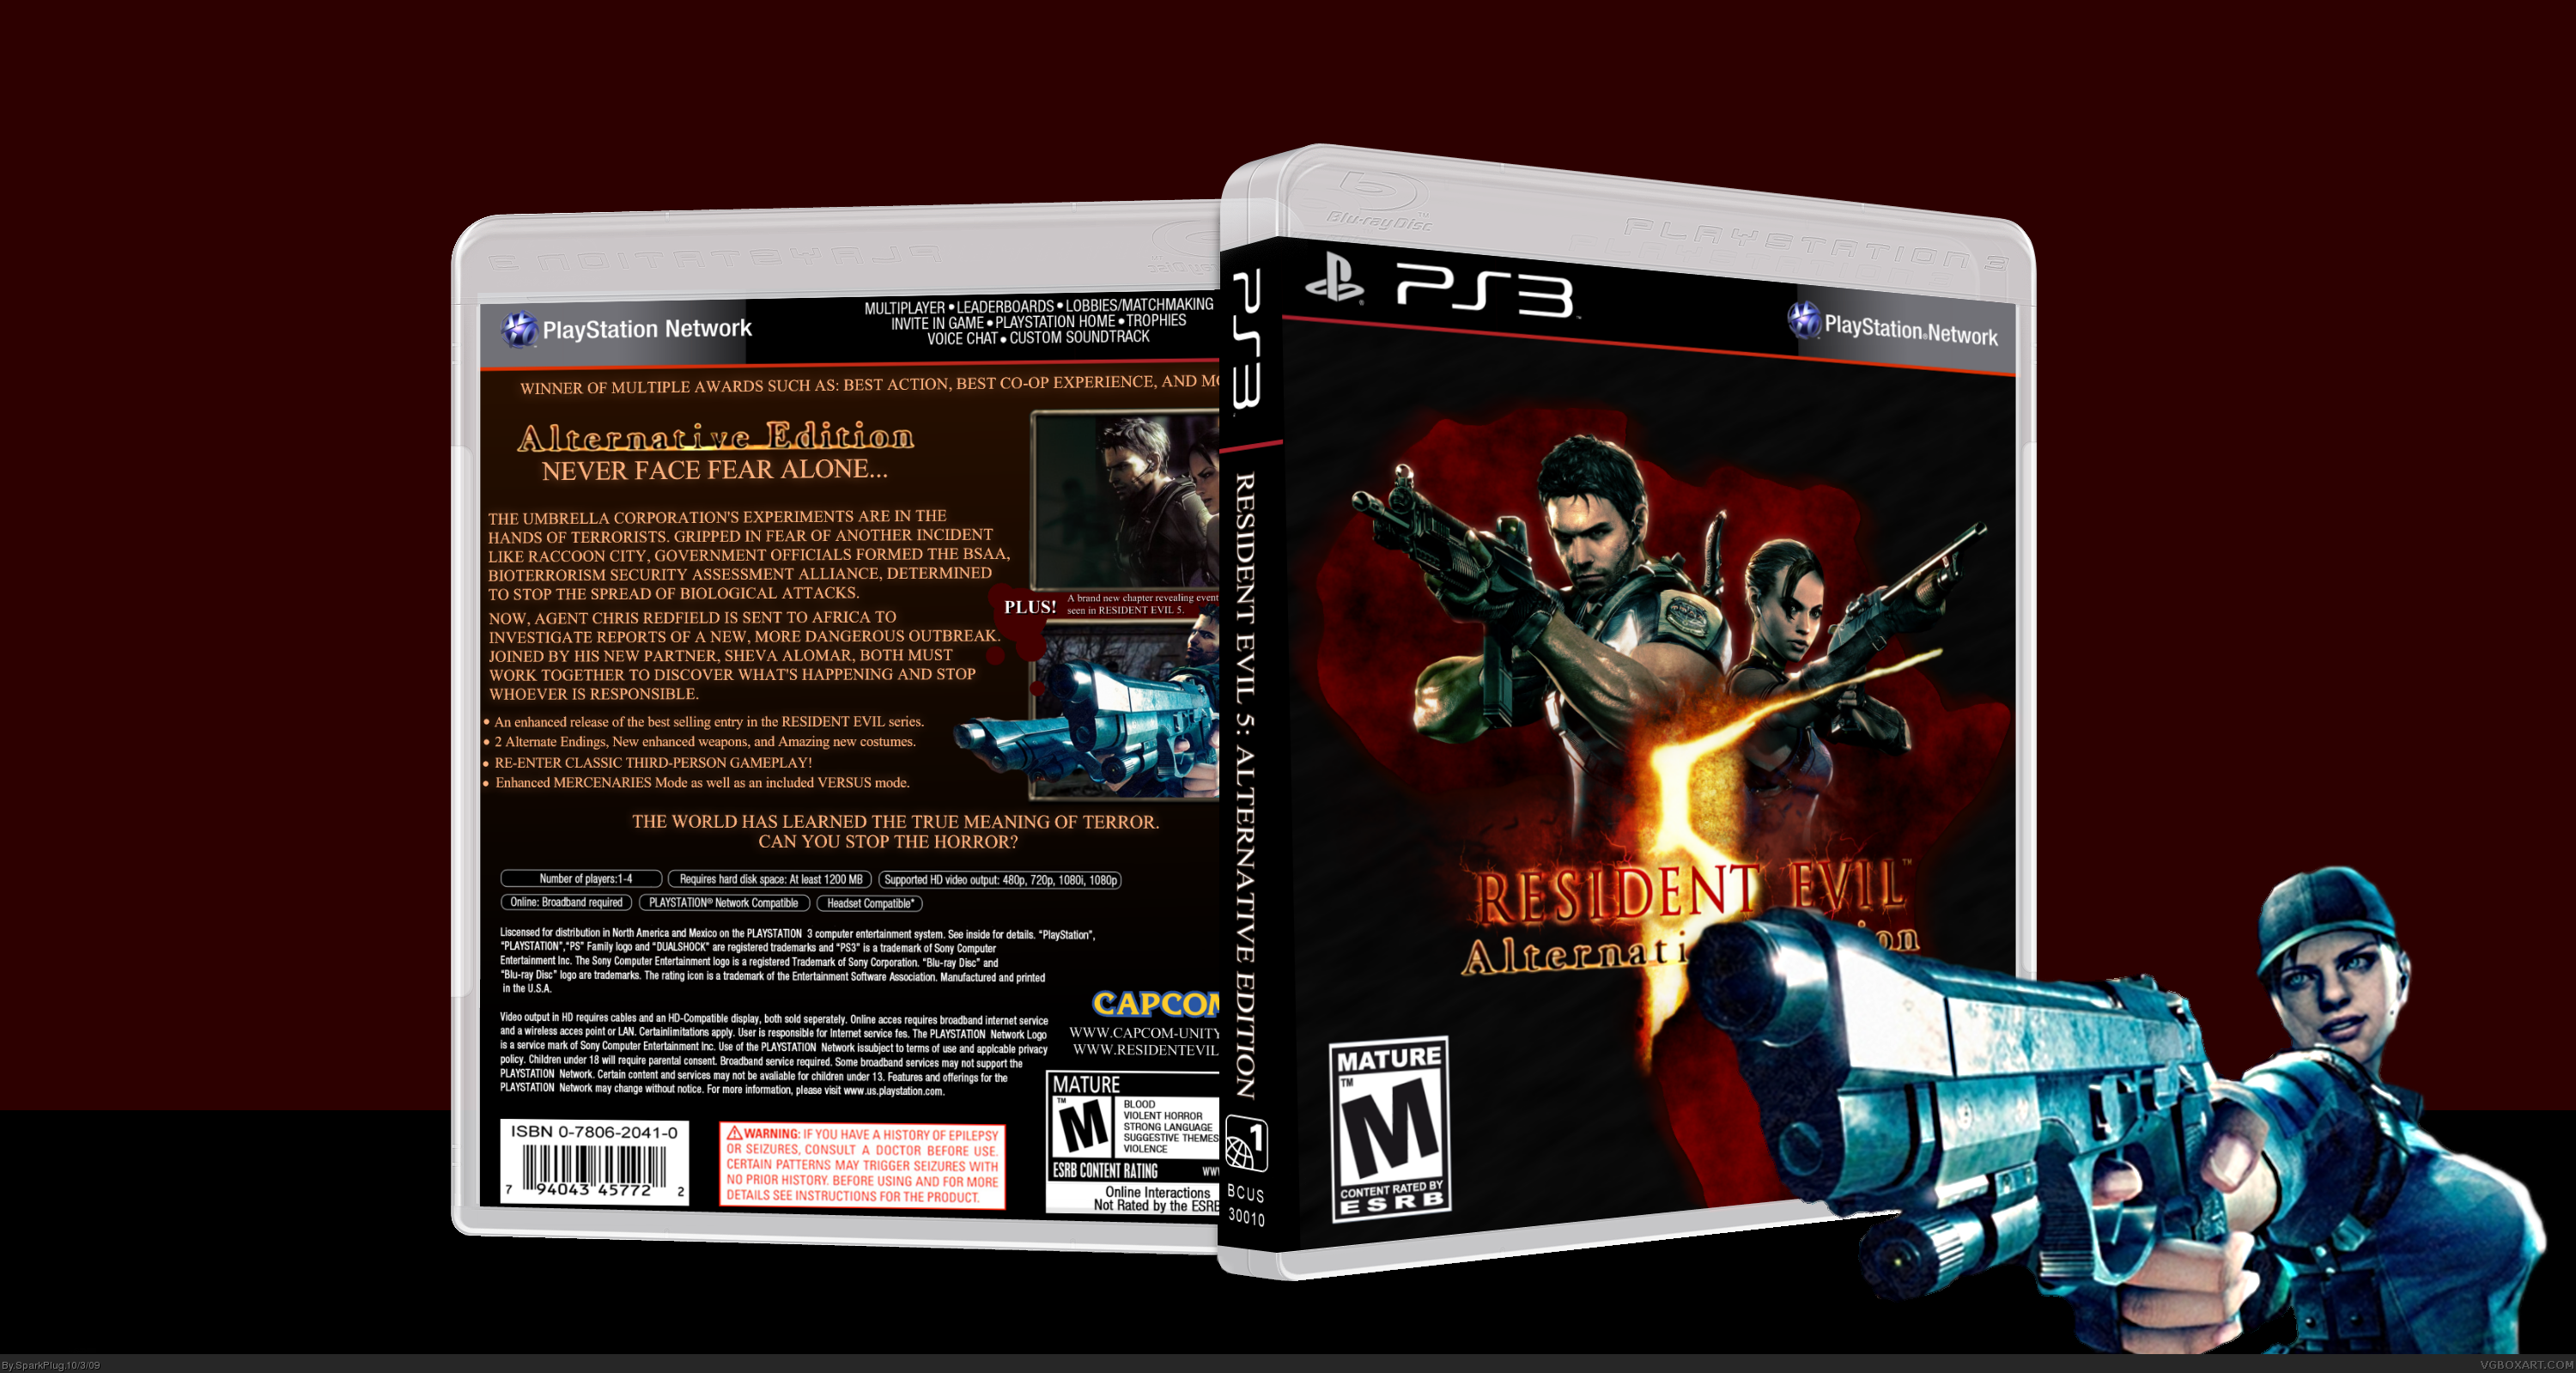 Resident Evil 5: Alternative Edition box cover